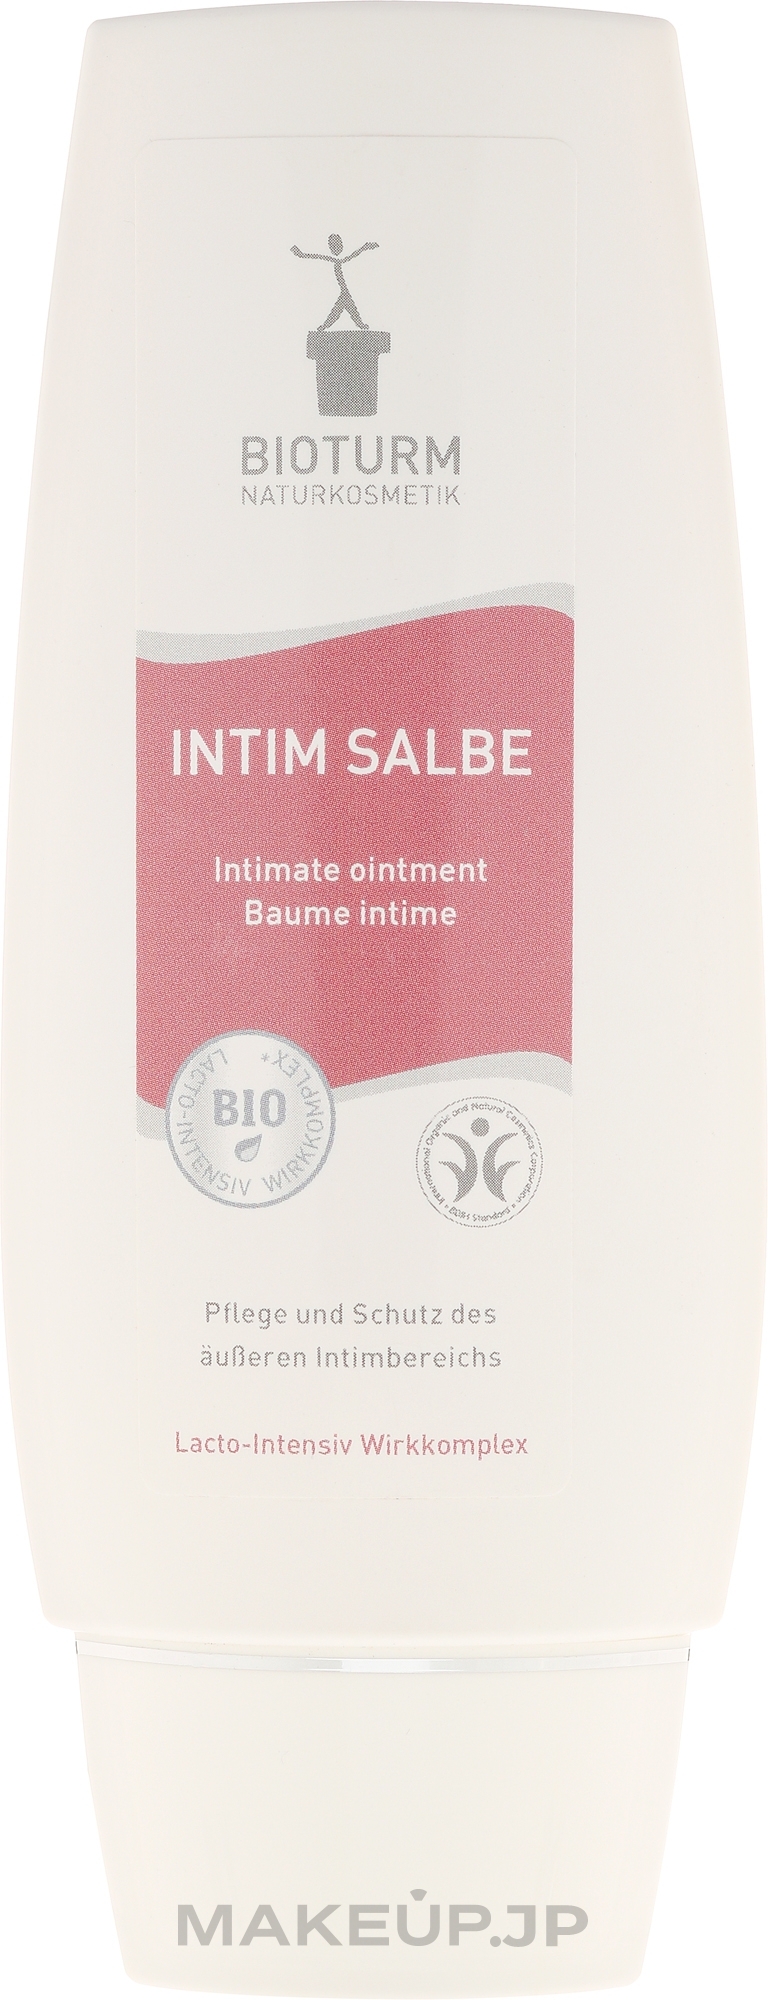 Regenerating Intimate Ointment "Chamomile & Calendula" - Bioturm Intim Salbe No.27 — photo 75 ml